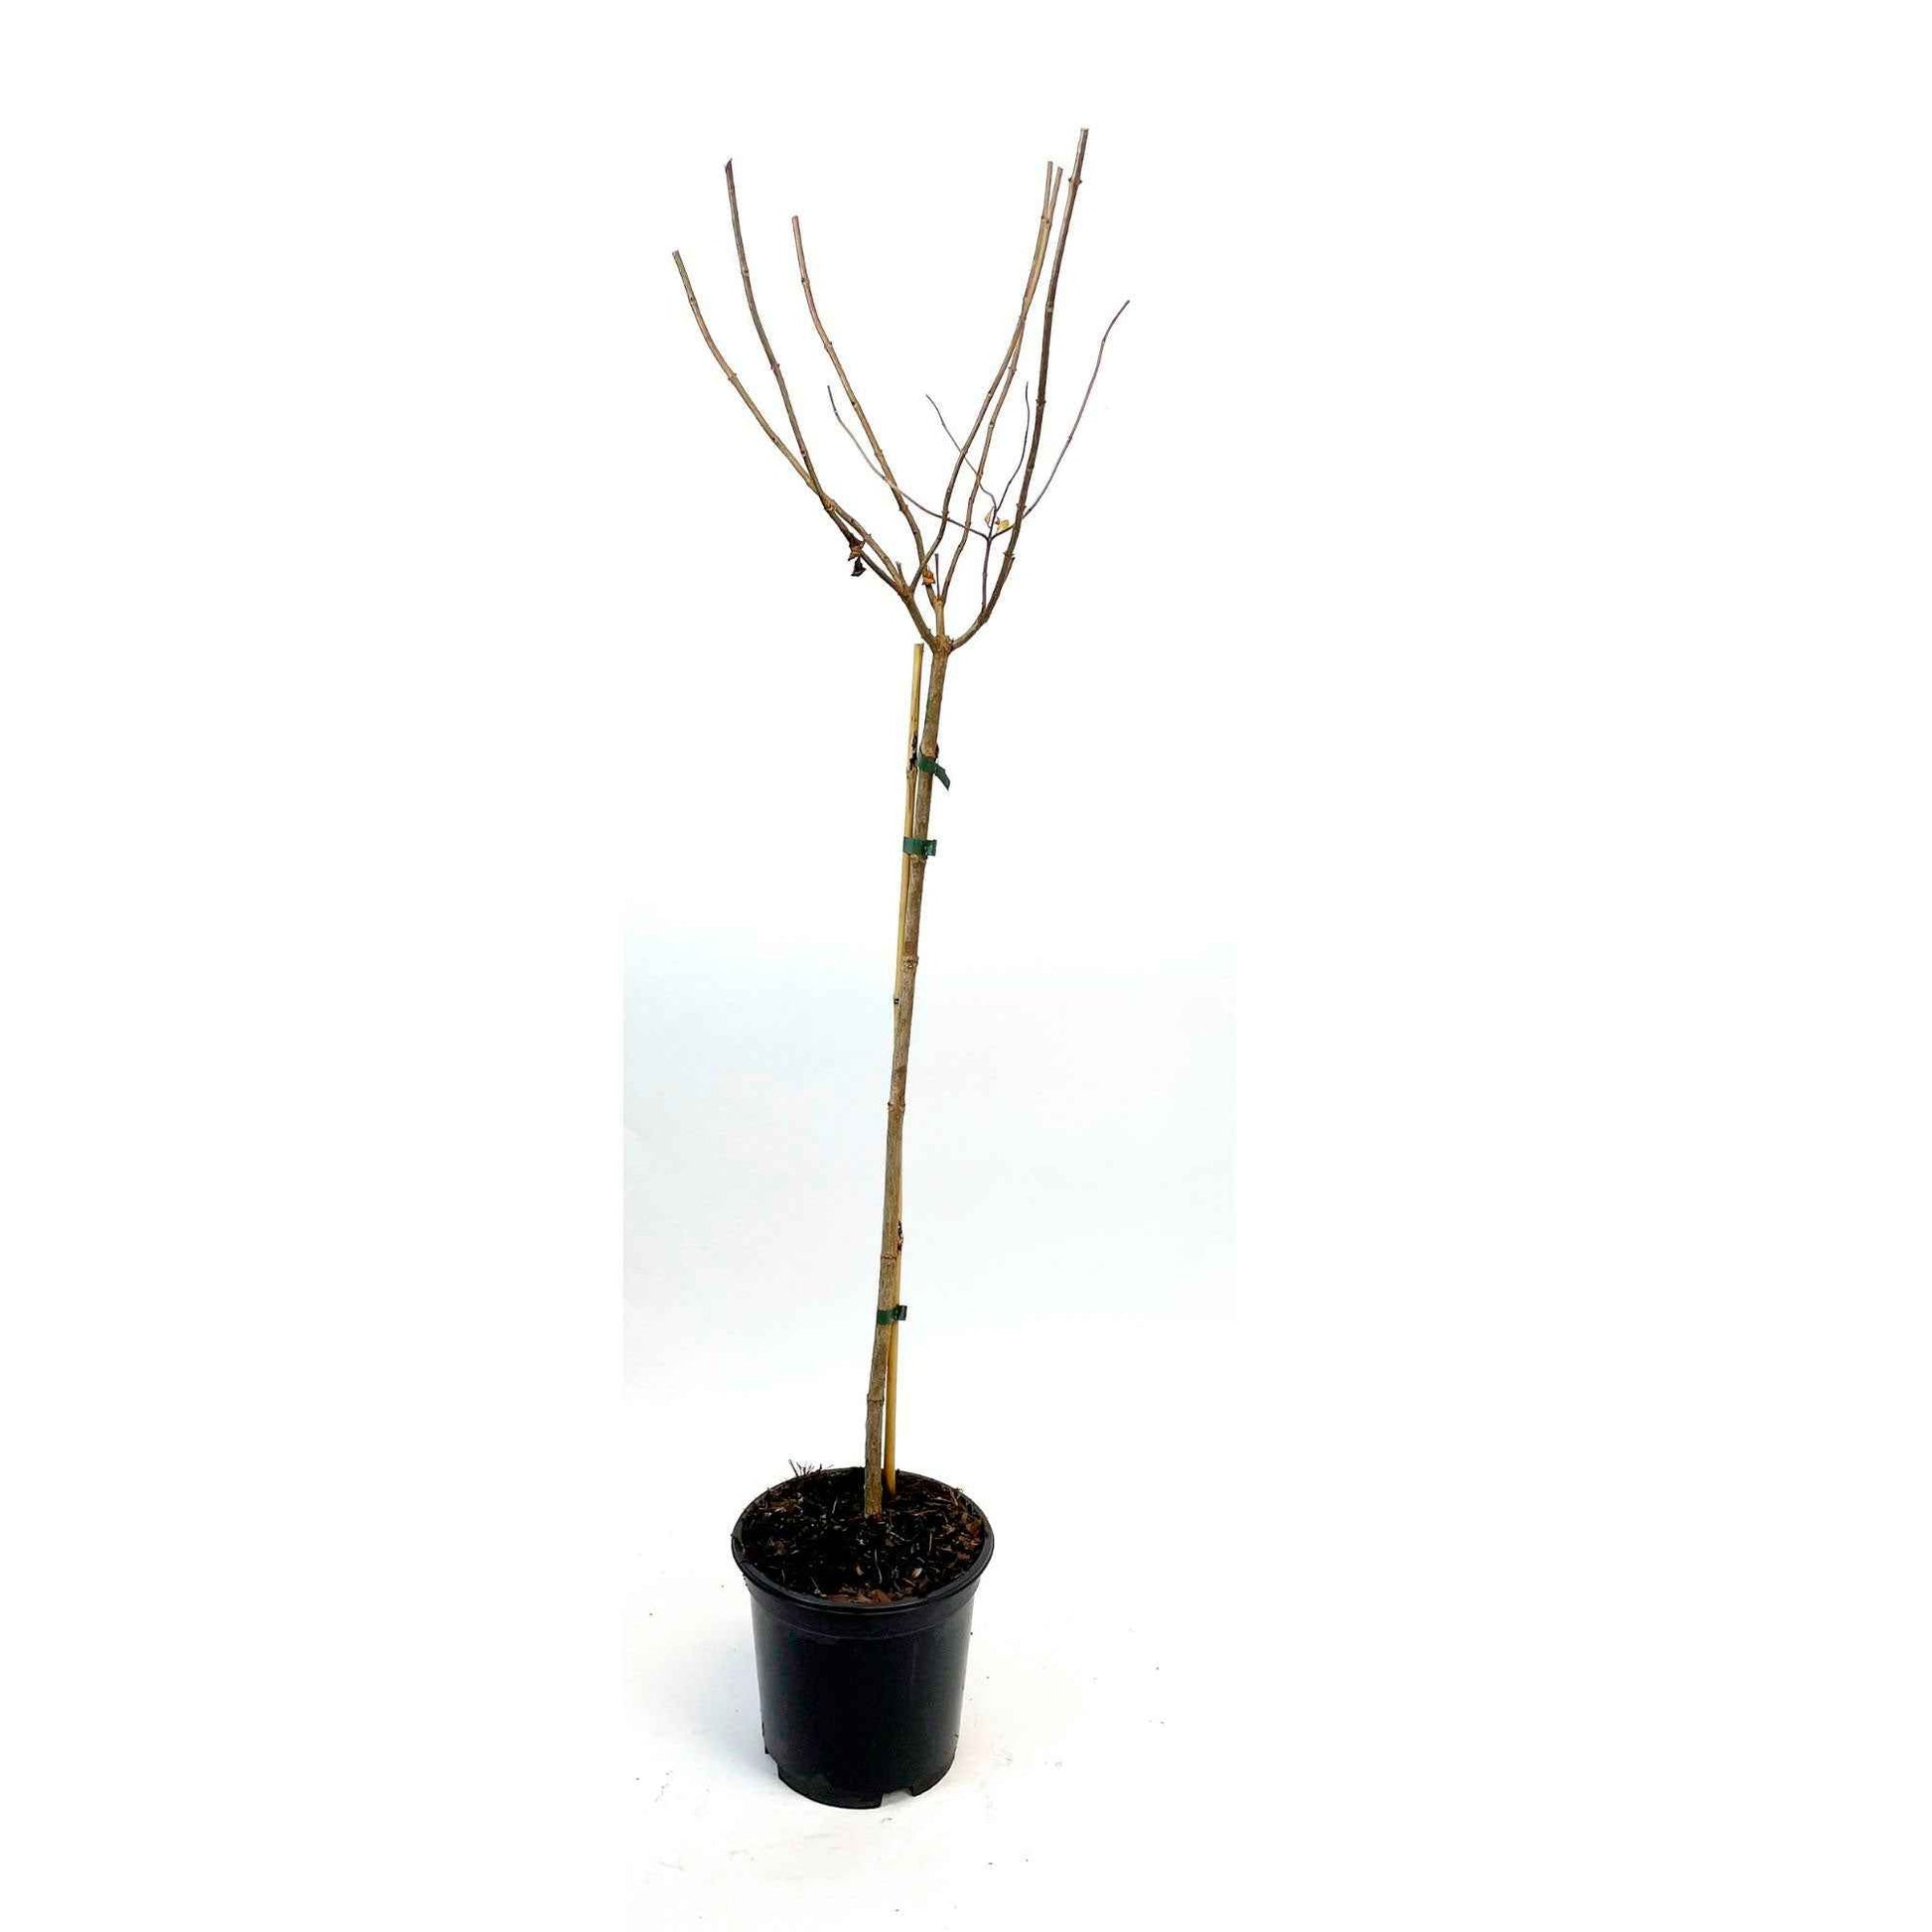 Pluimhortensia 'Limelight' - Hydrangea paniculata limelight ® - Hortensia